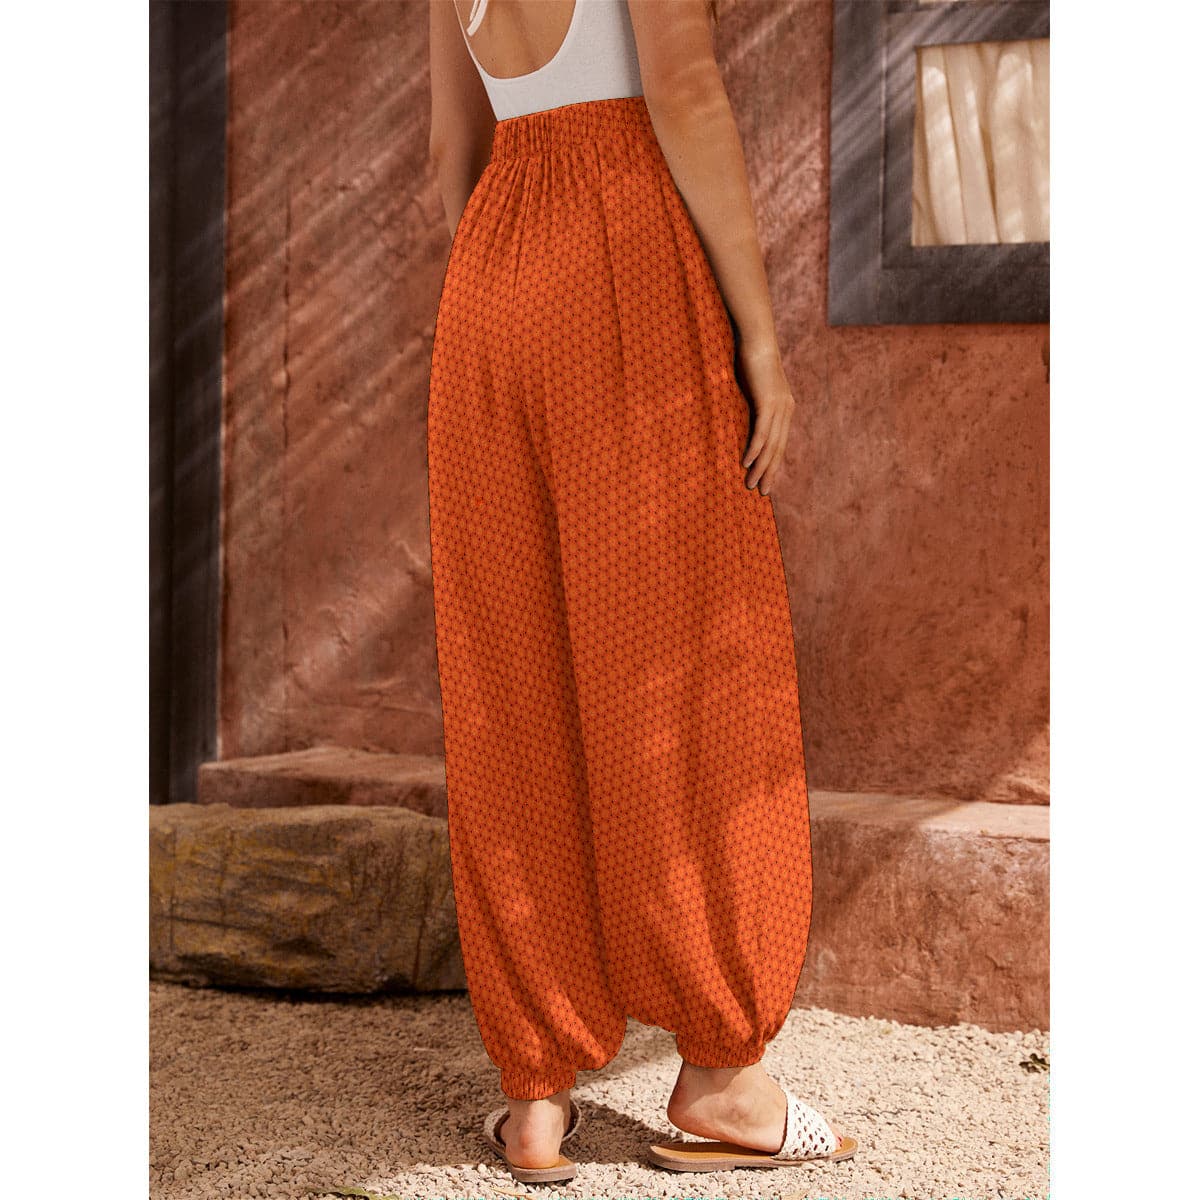 Orange snake pattern trendy 2022 Women's Carrot Pants, by Sensus Studio Design